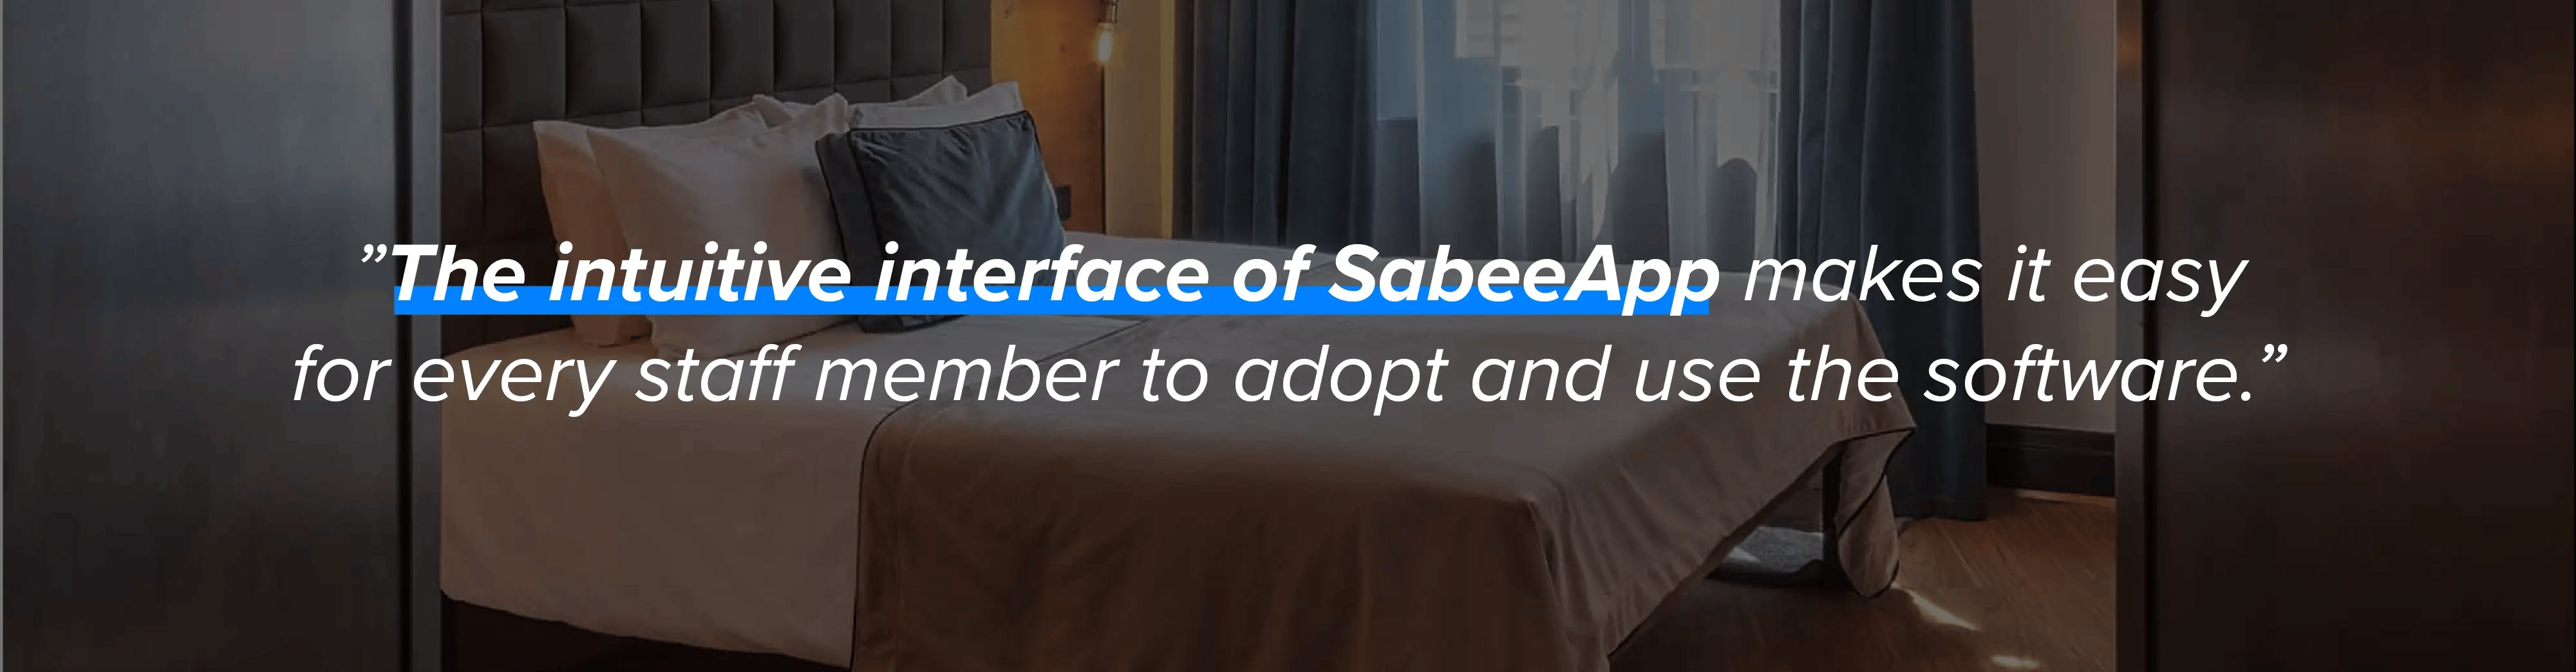 SabeeApp-case-study-hotel-rum